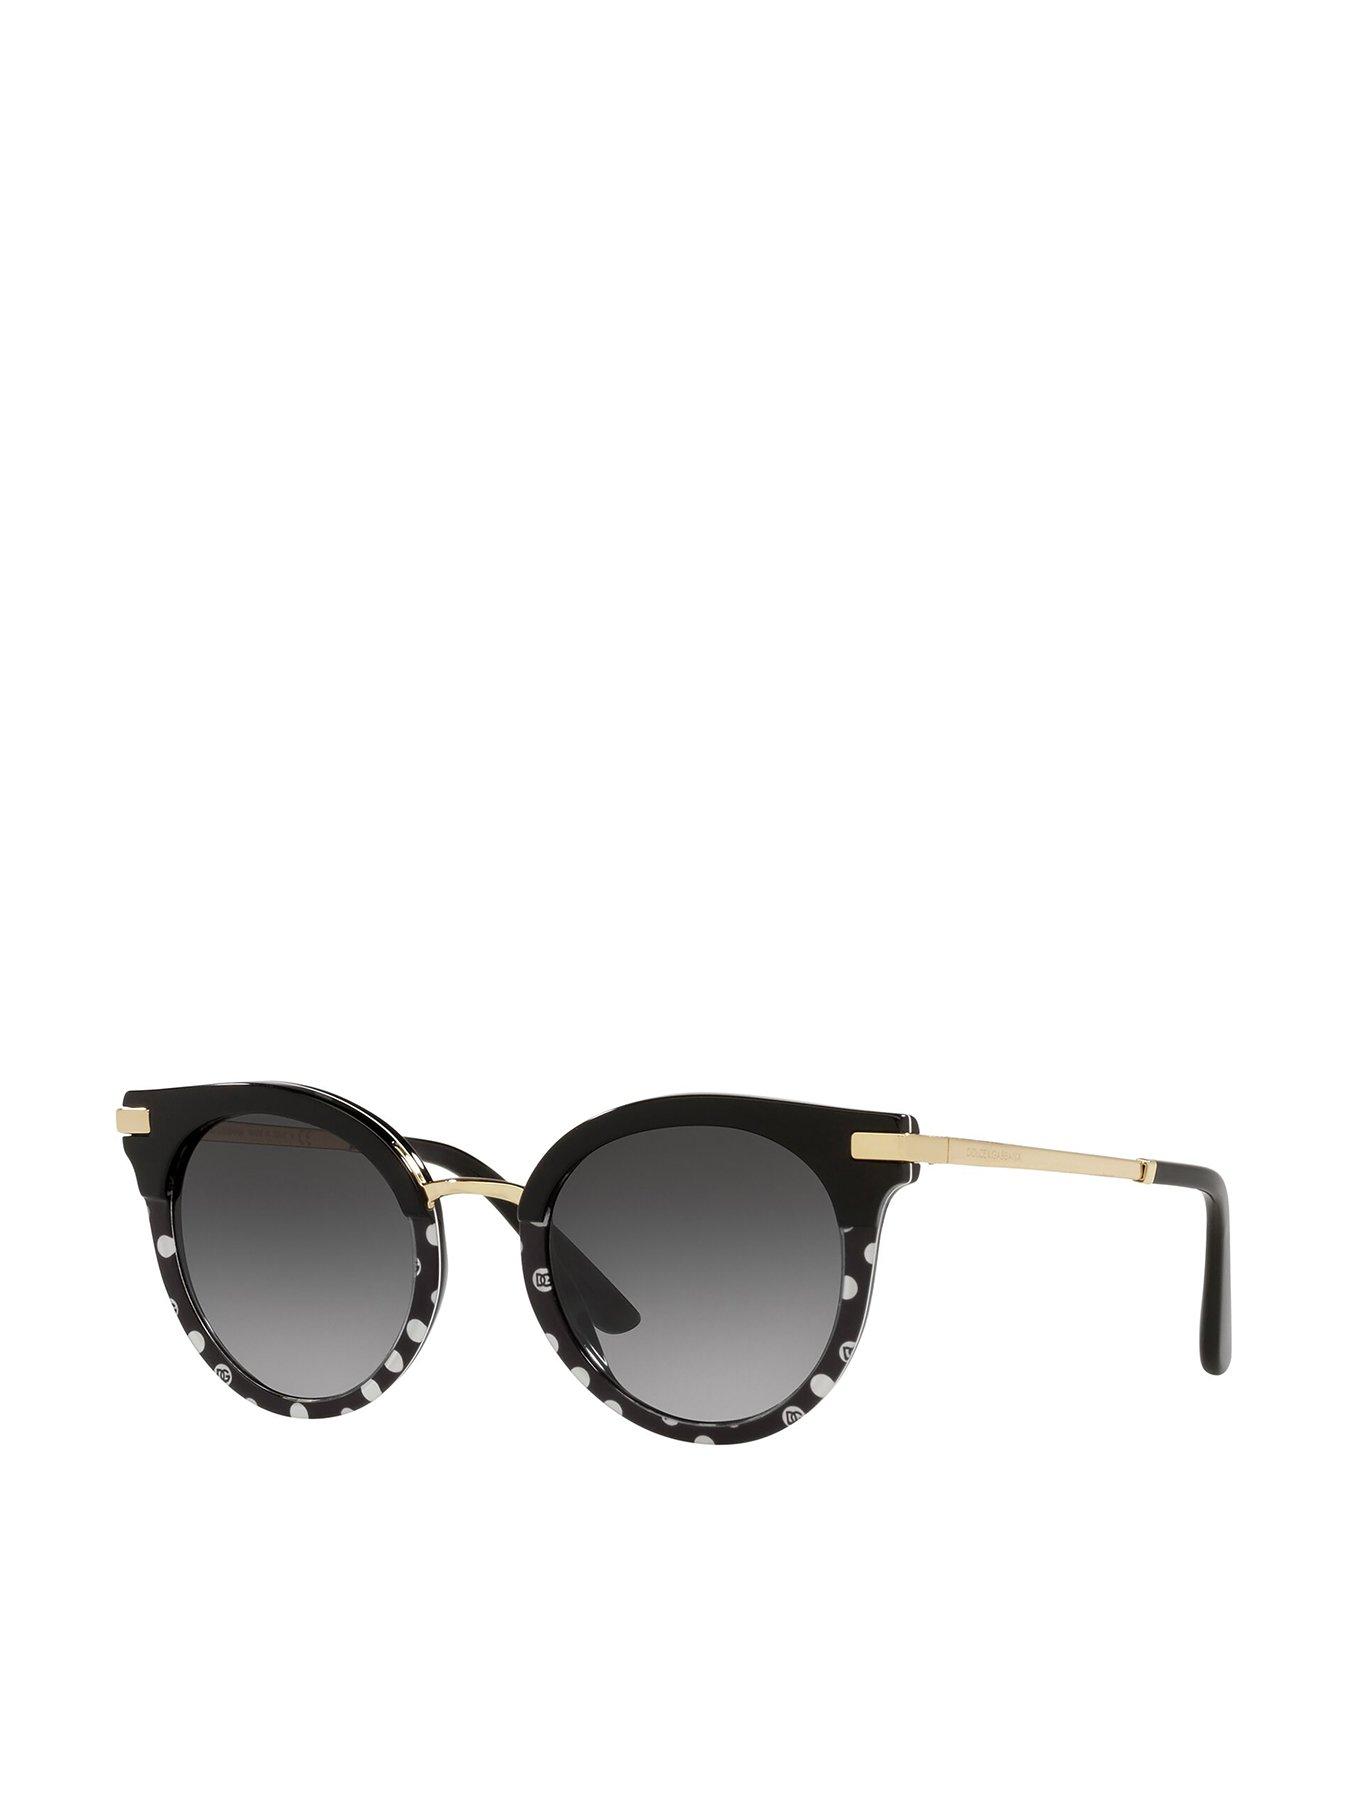 Accessories Round Sunglasses - Black